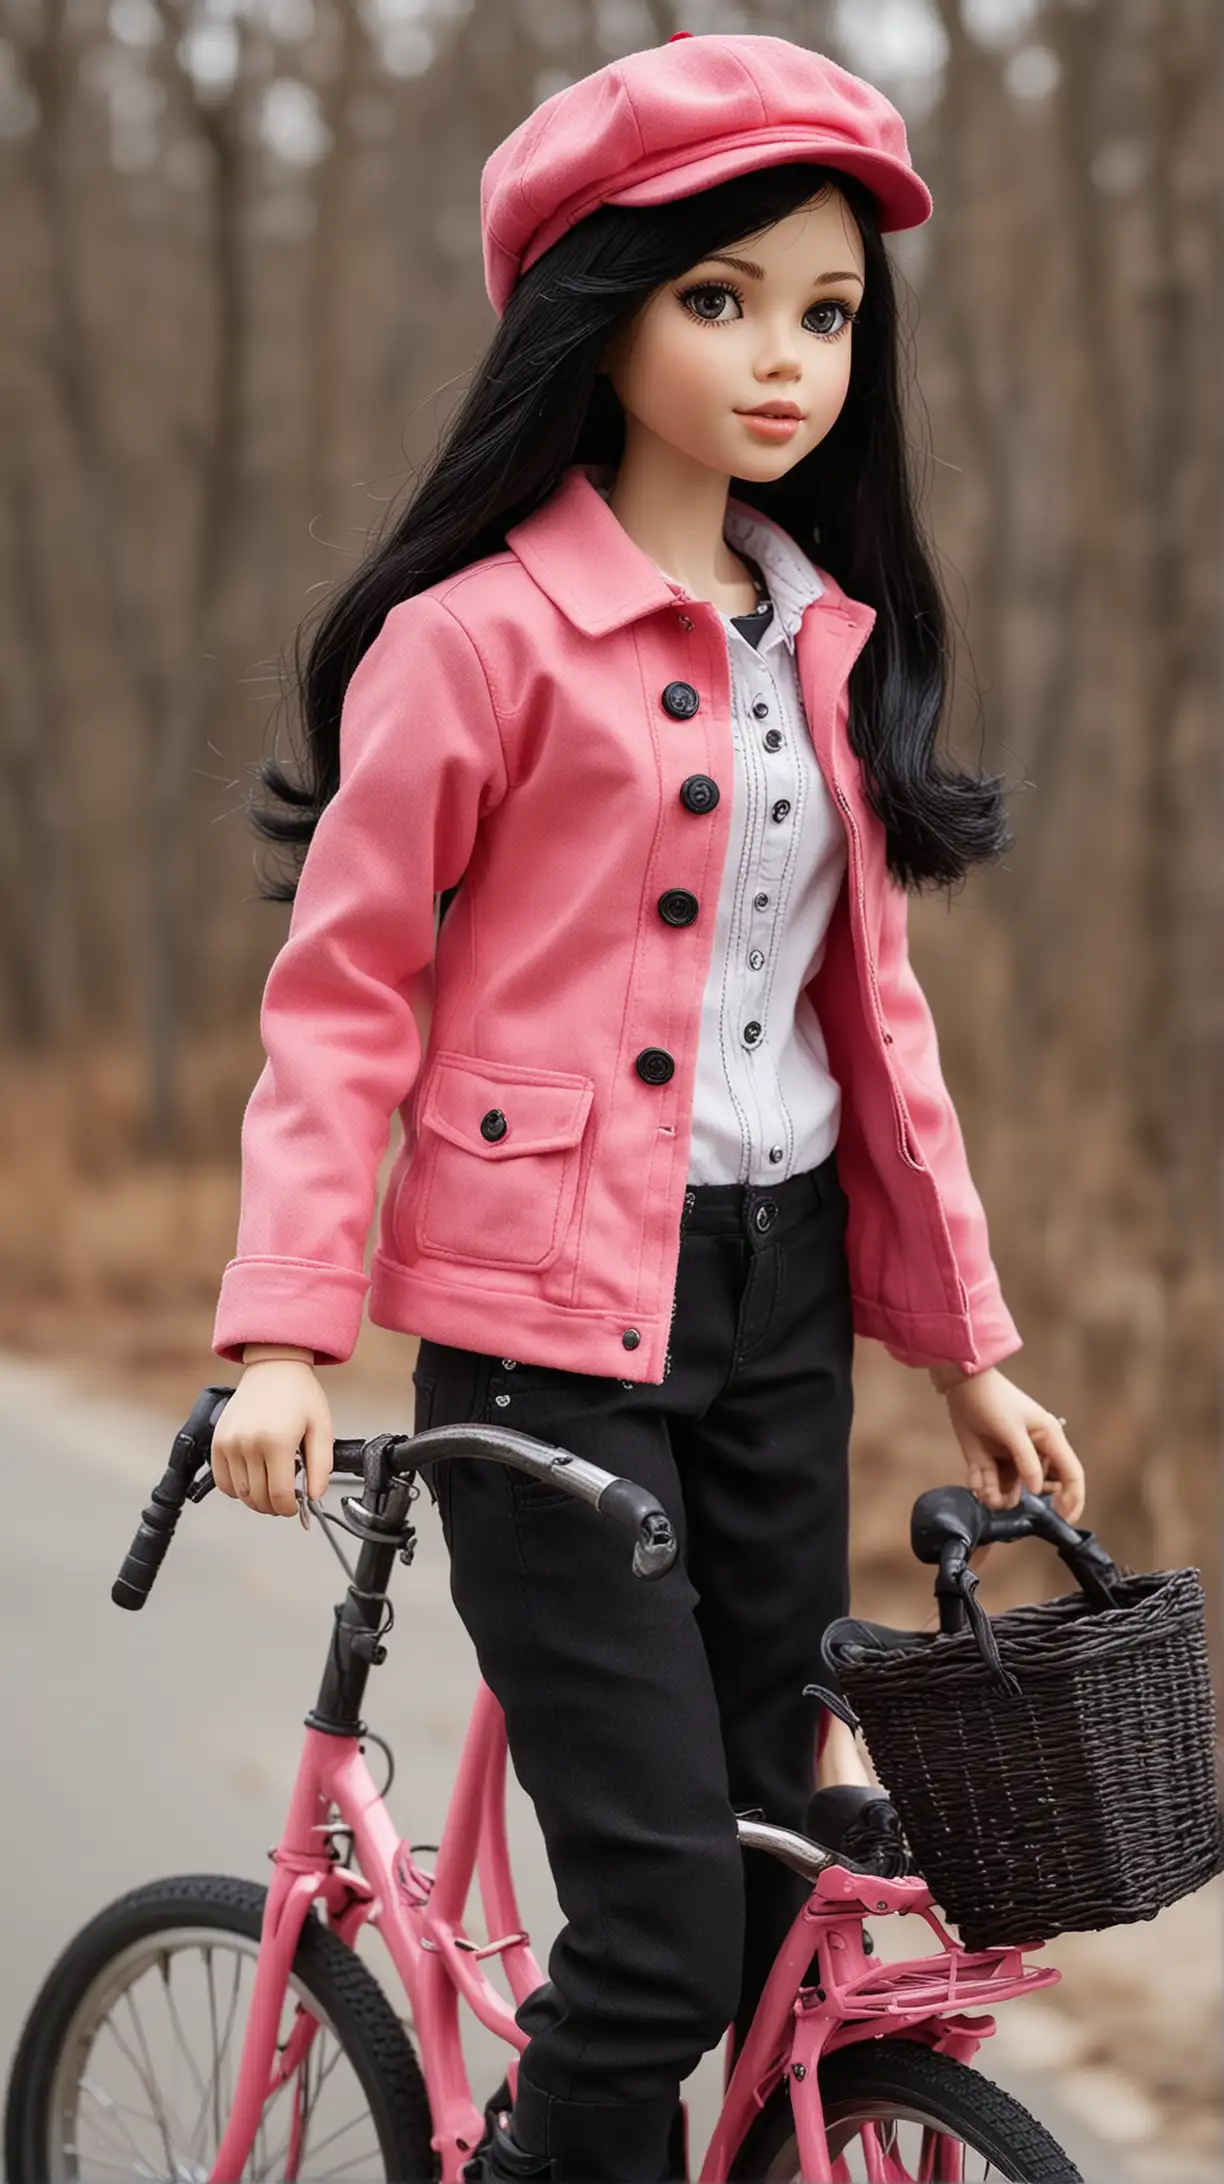 Beautiful female teenage doll, white skin, shoulder length black hair, red hat. Pink jacket, black bag. red pants, black shoes, riding a bicycle